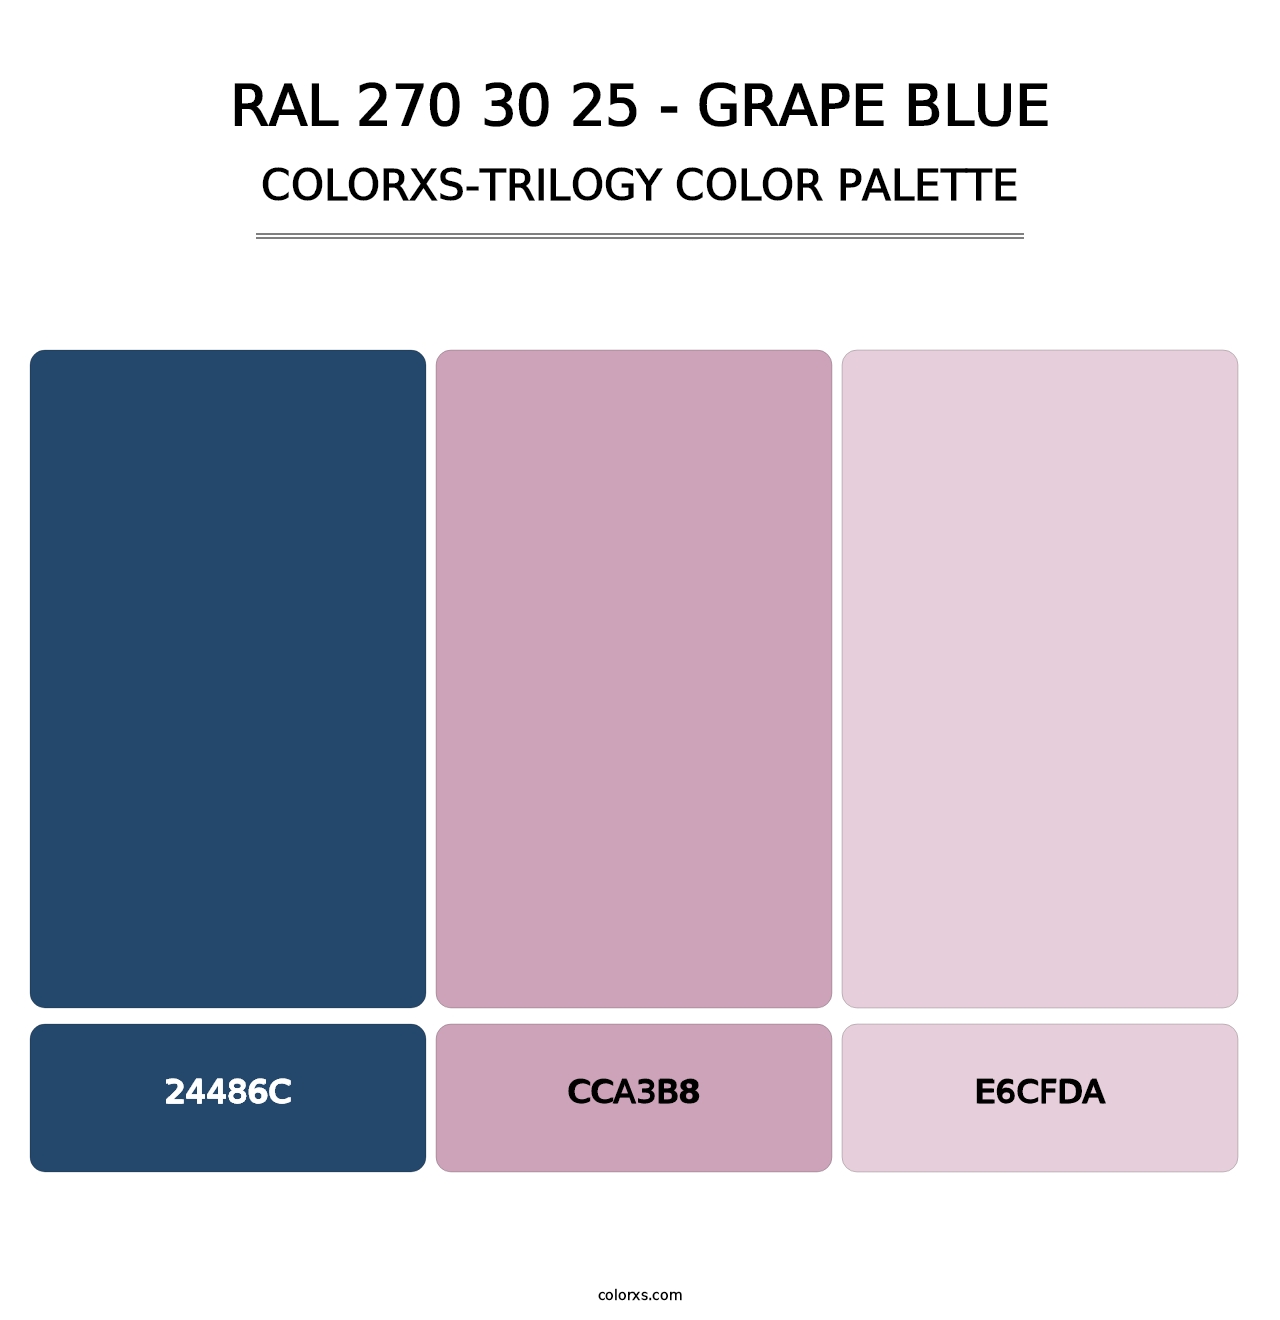 RAL 270 30 25 - Grape Blue - Colorxs Trilogy Palette